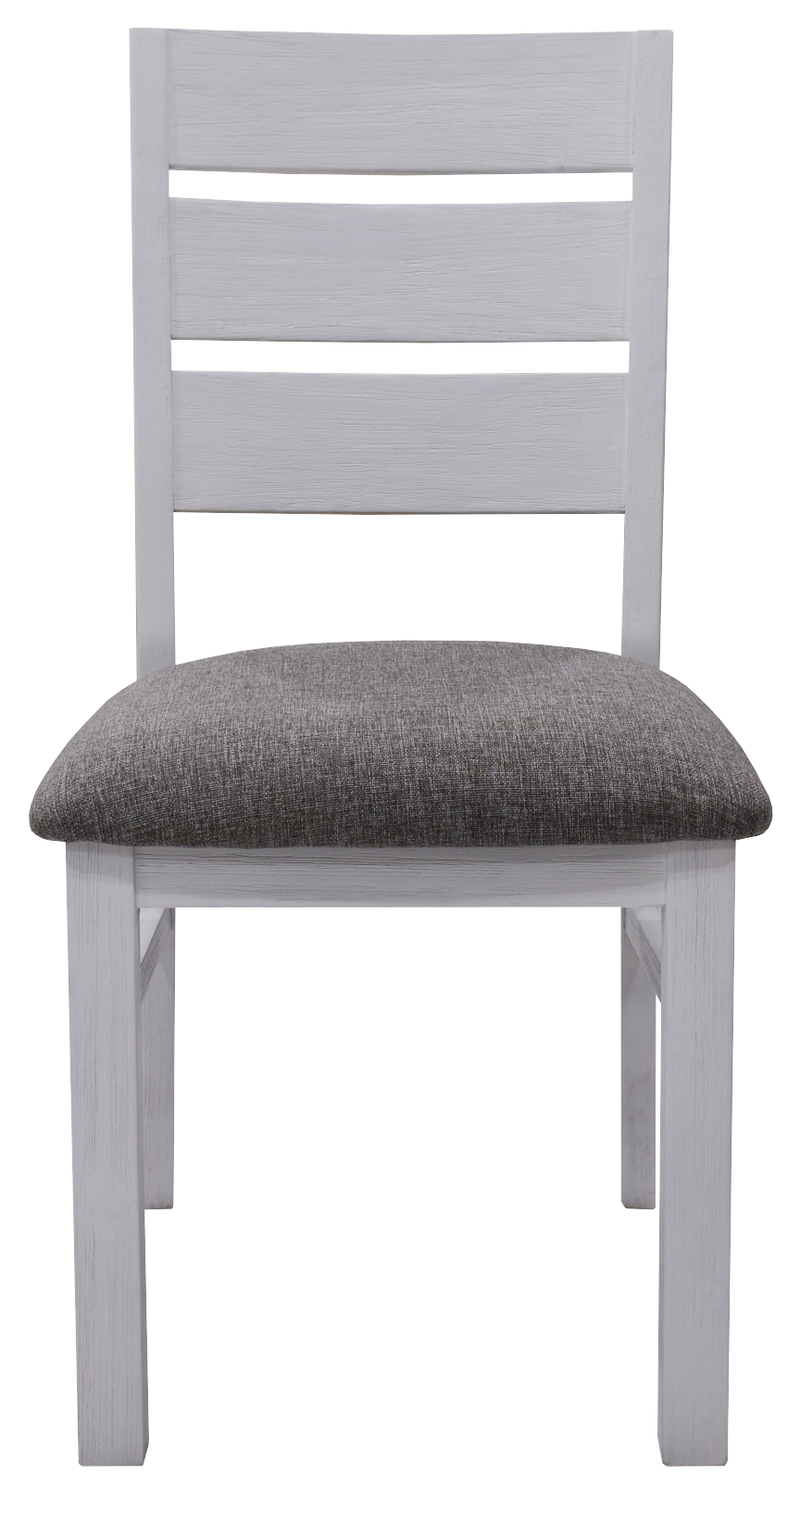 Foxground_6_Seater_Coastal_Dining_Table_190cm_and_Chairs_Set_White/_Whitewashed_IMAGE_6